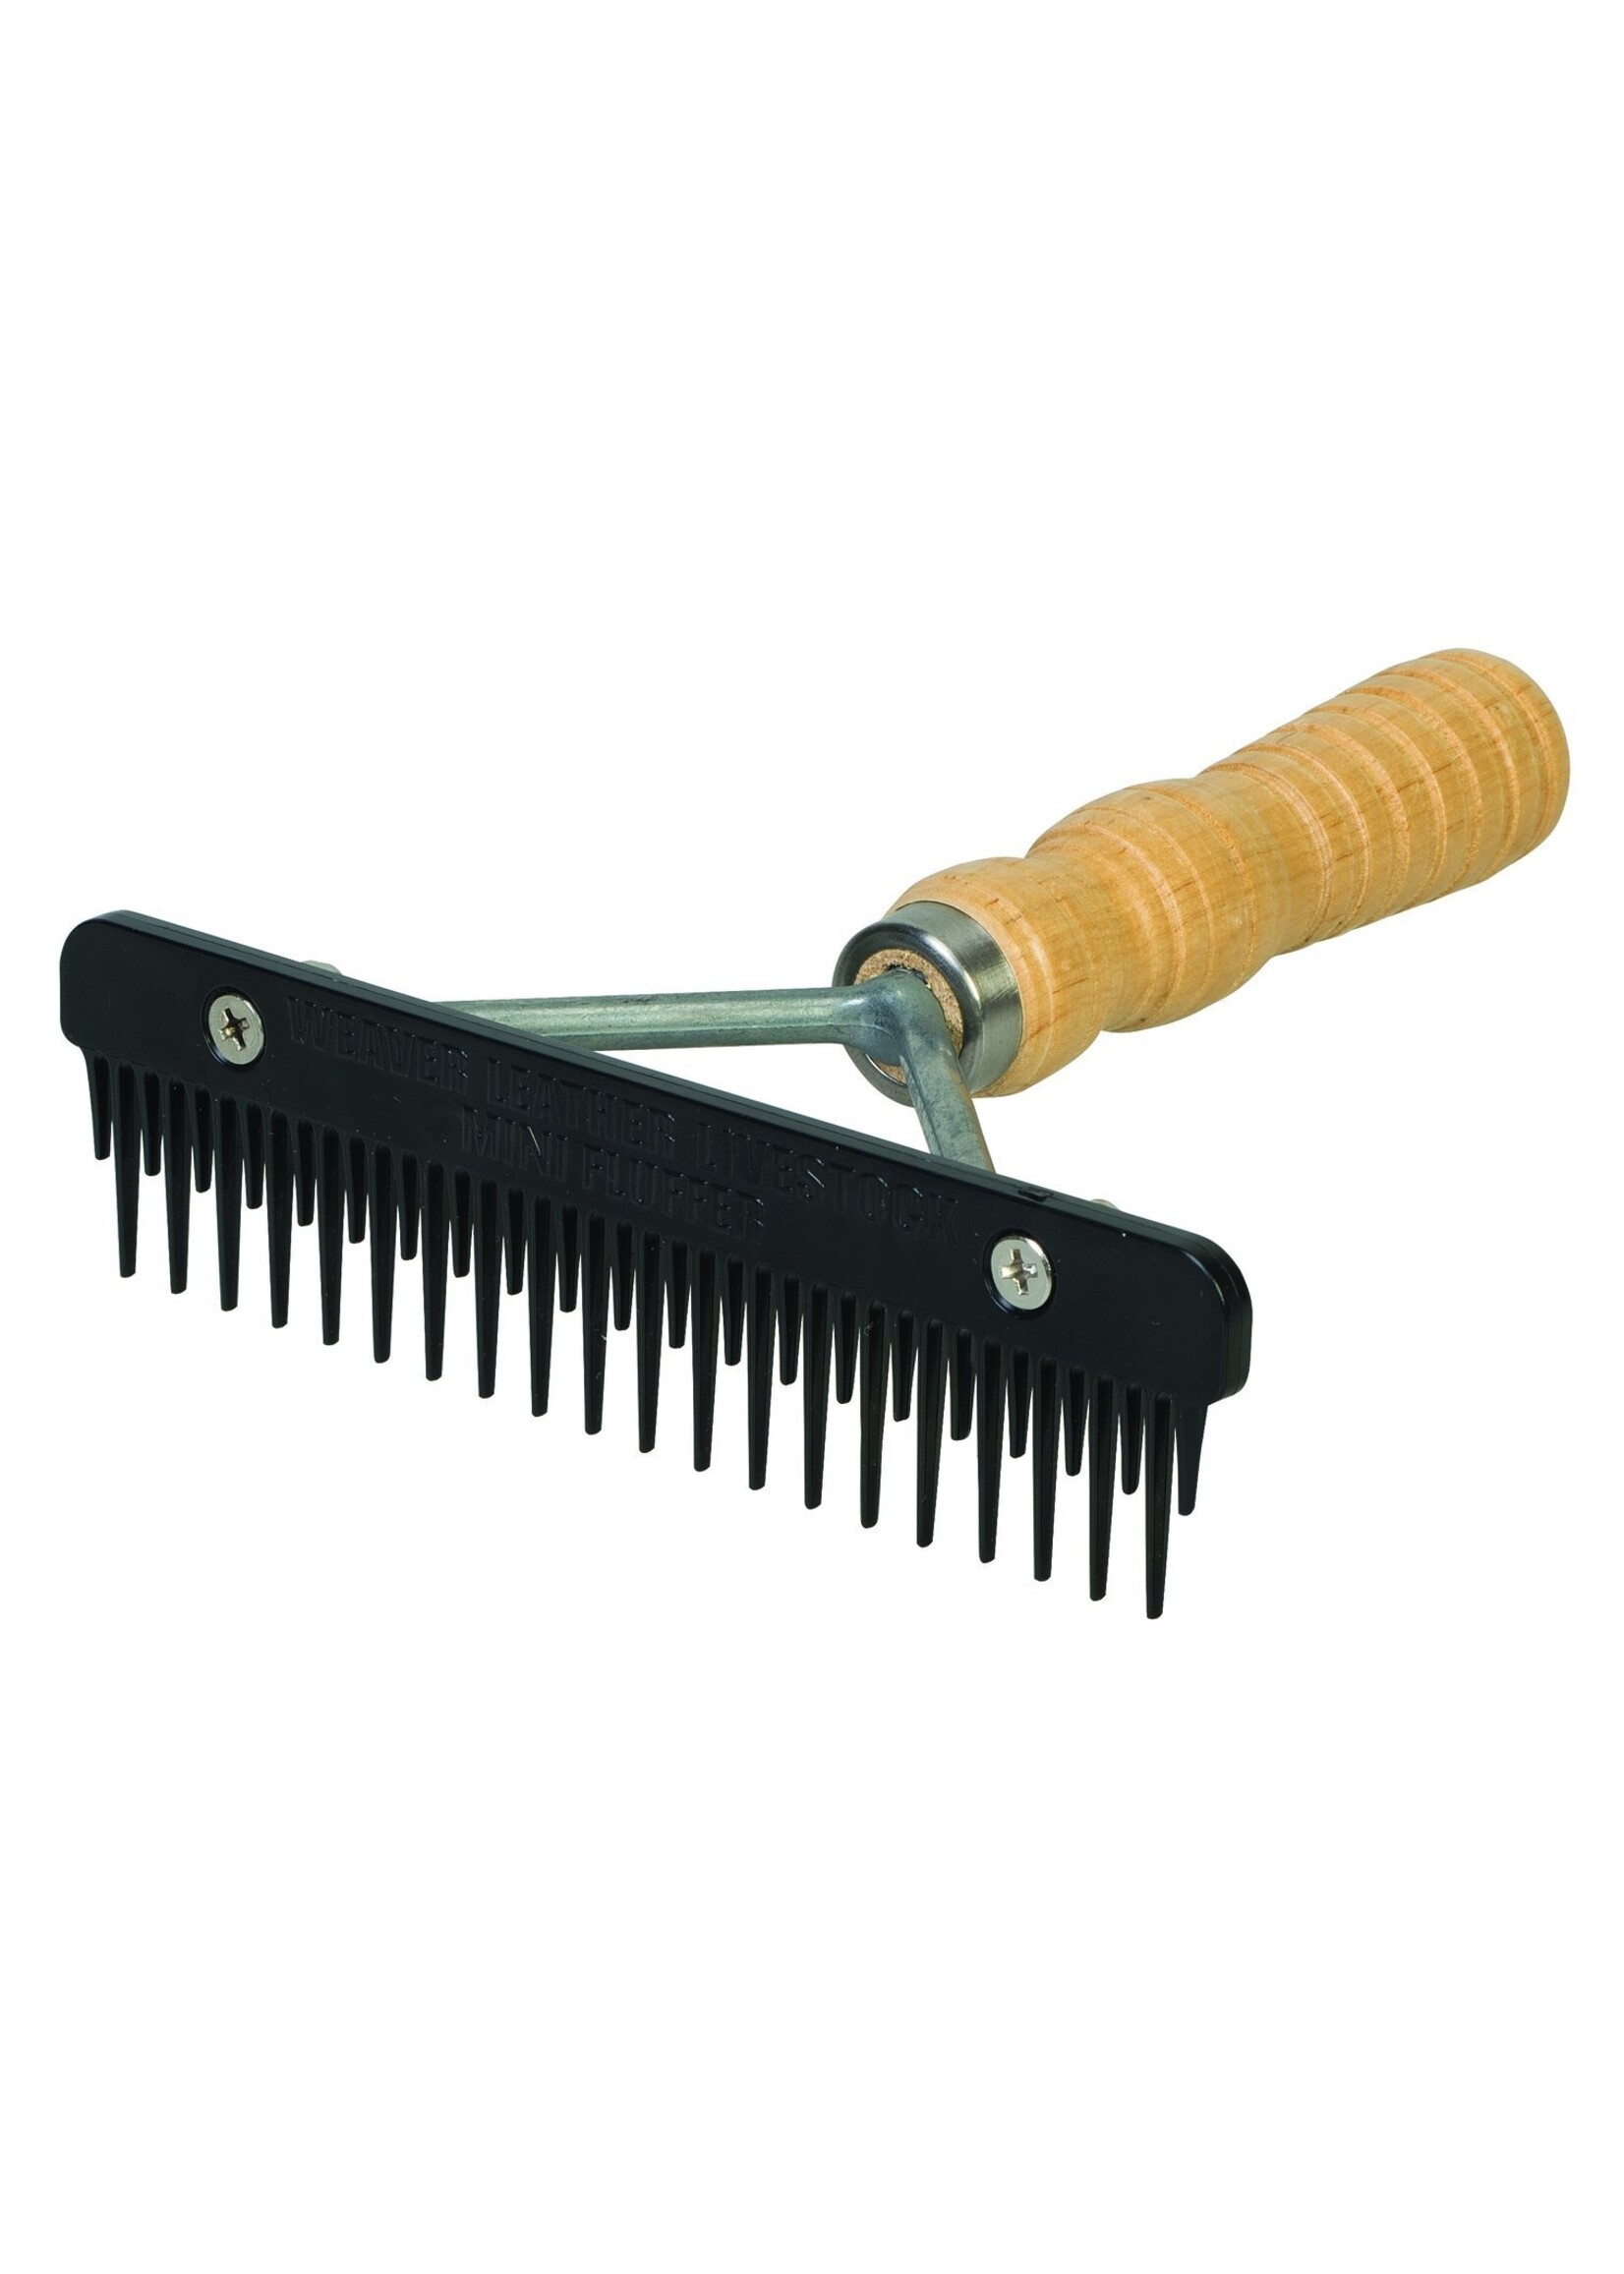 Weaver Livestock Weaver Livestock Plastic Mini Fluffer Comb w/ Wood Handle